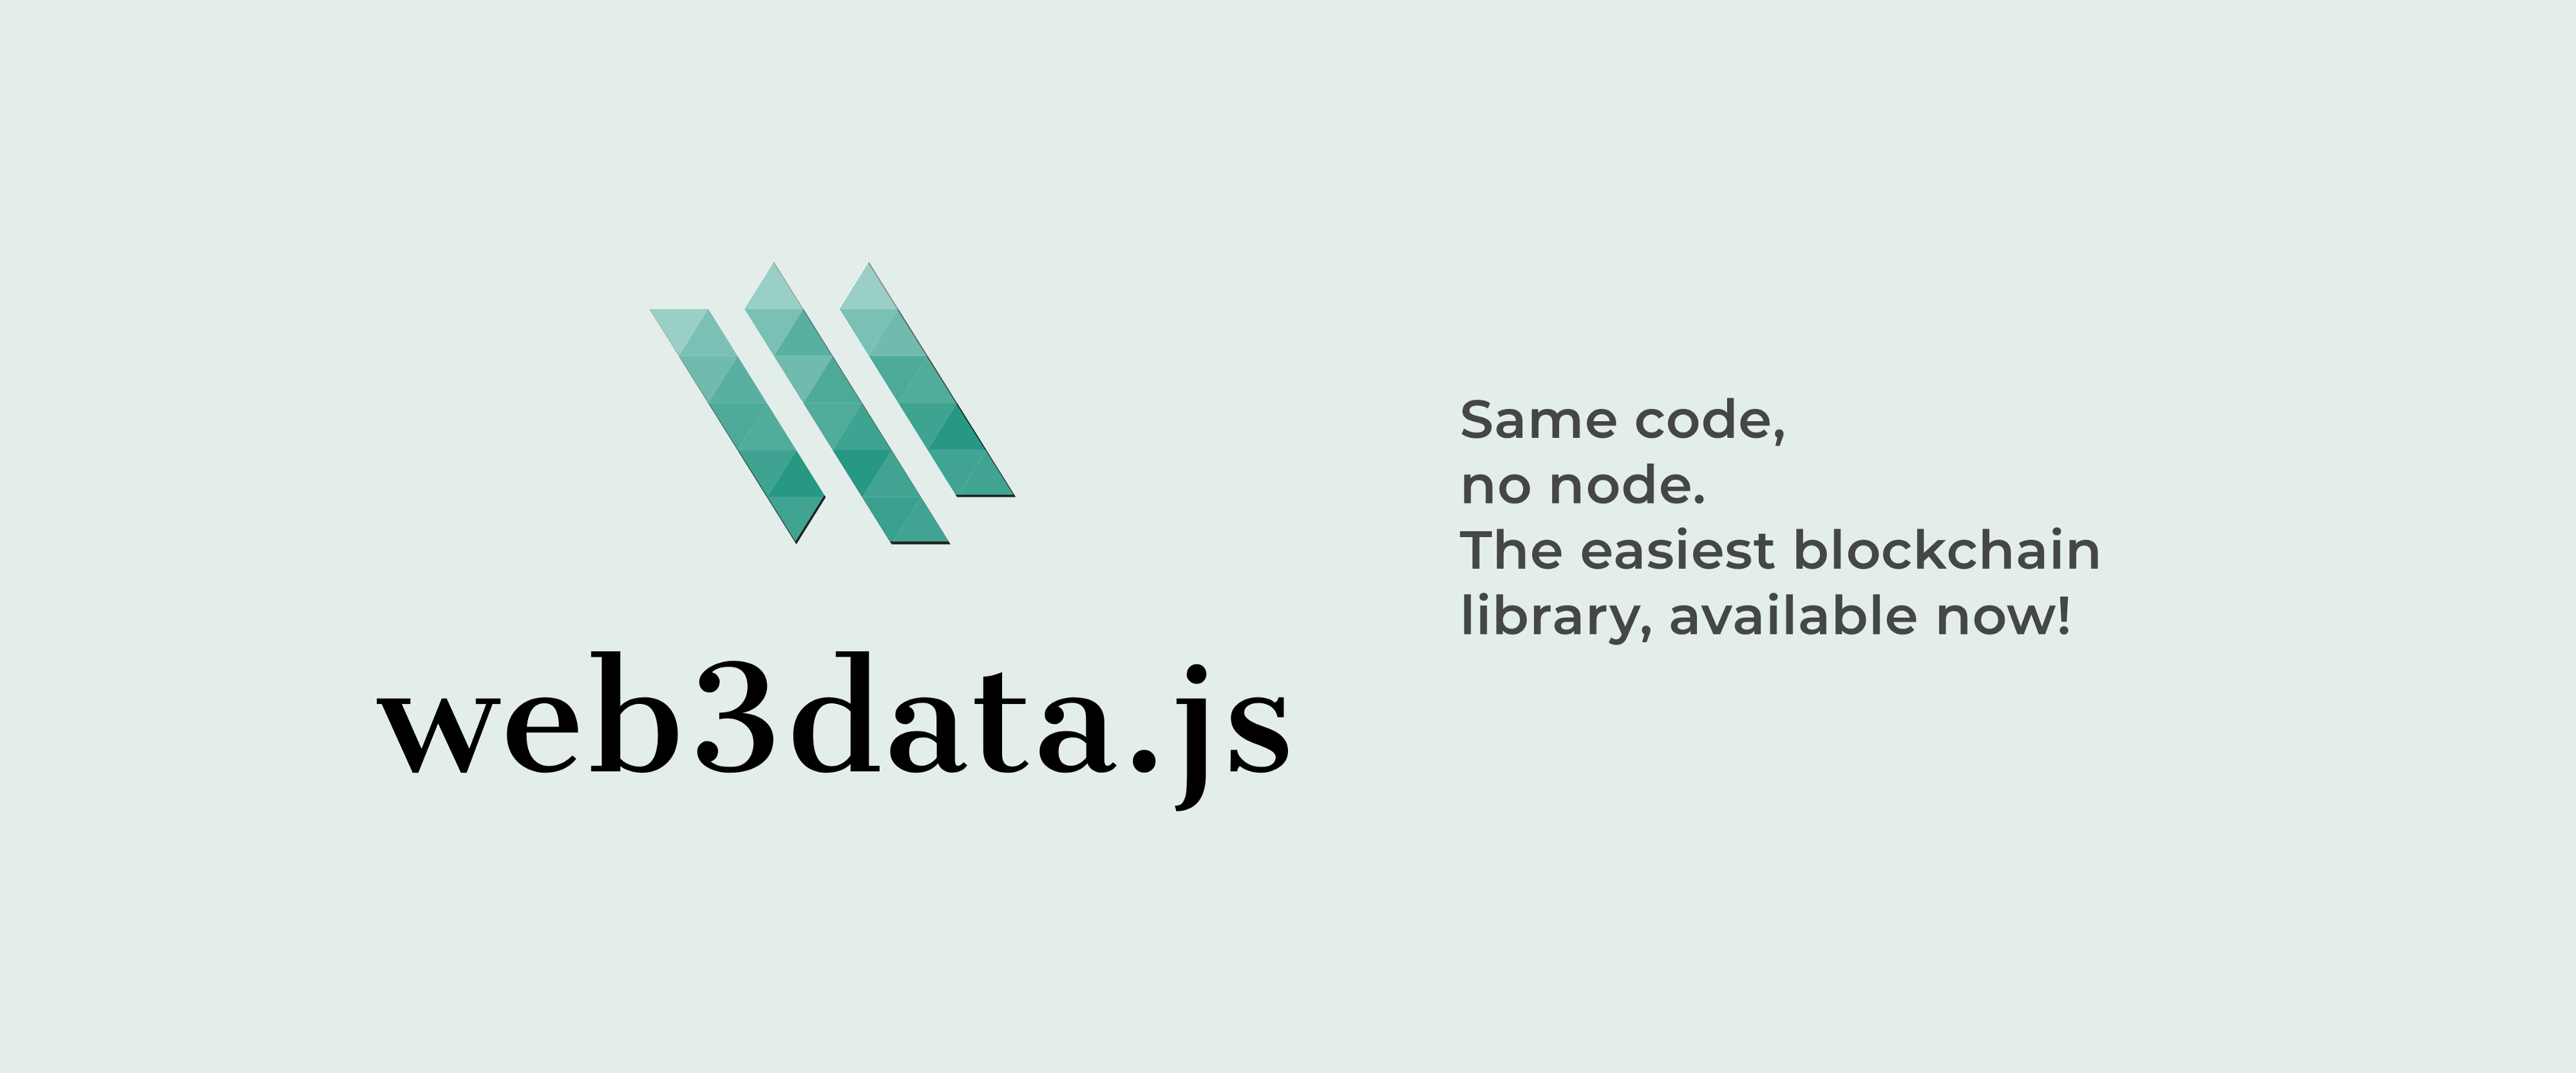 web3data-js-samecode